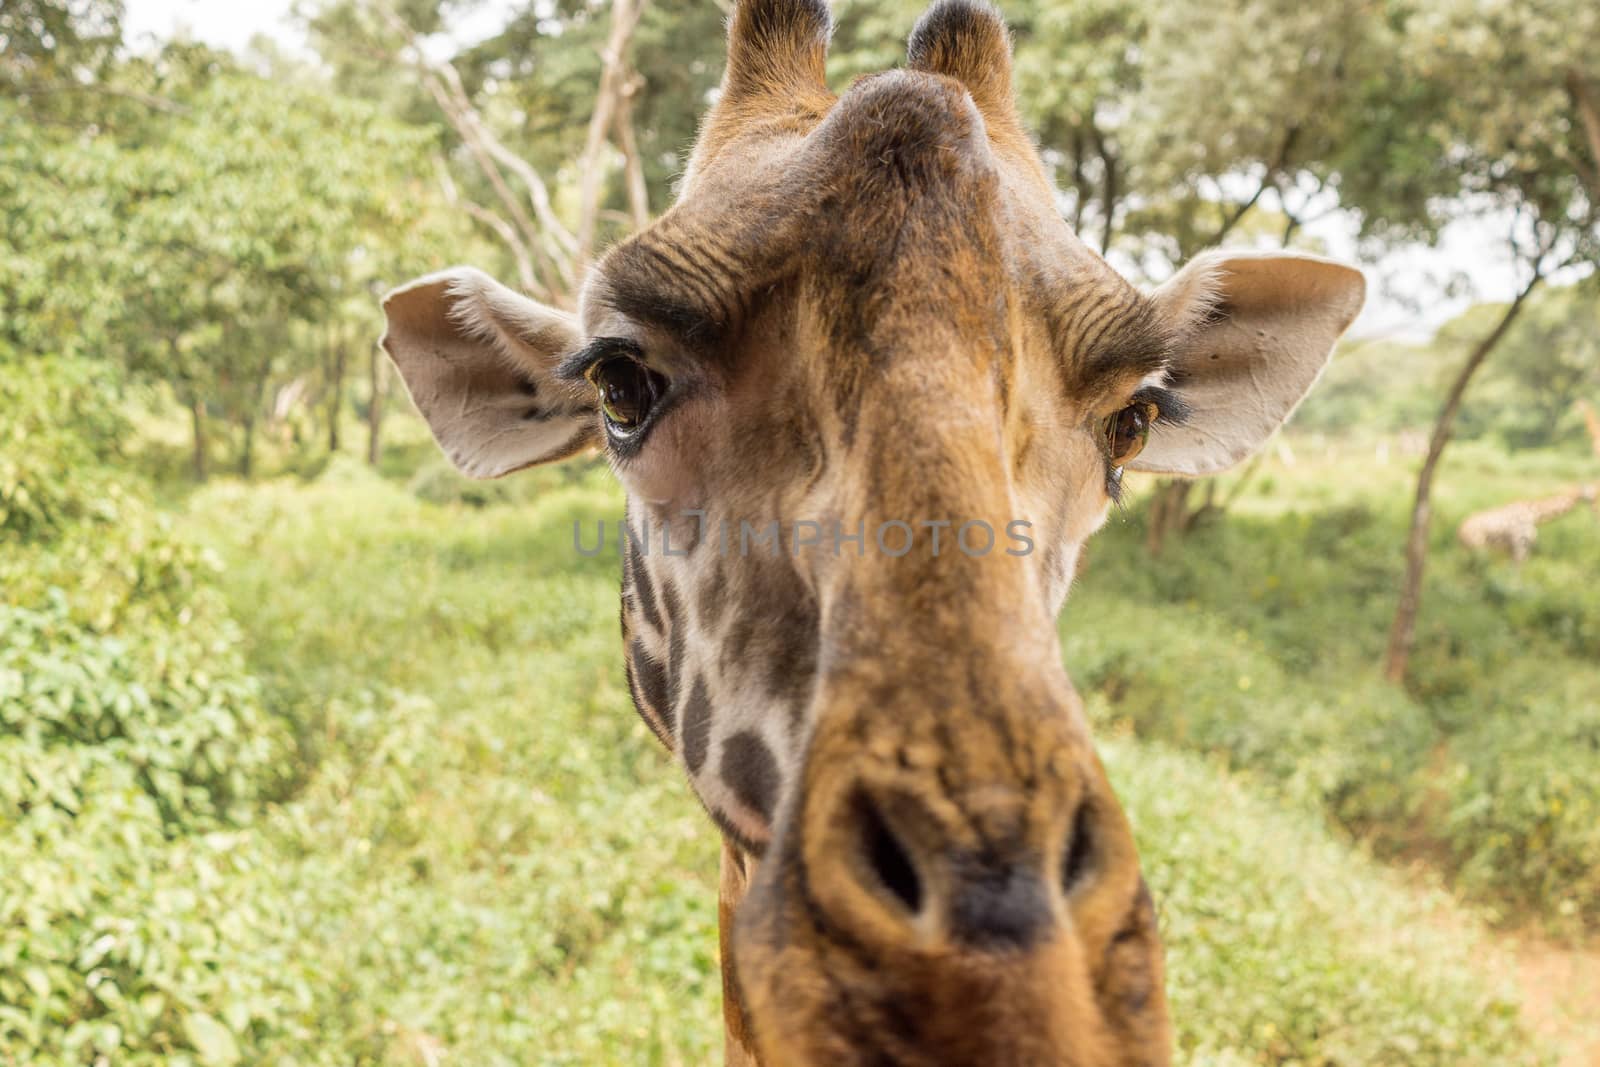 Closeup headshot of an adult African Giraffe from the neck up